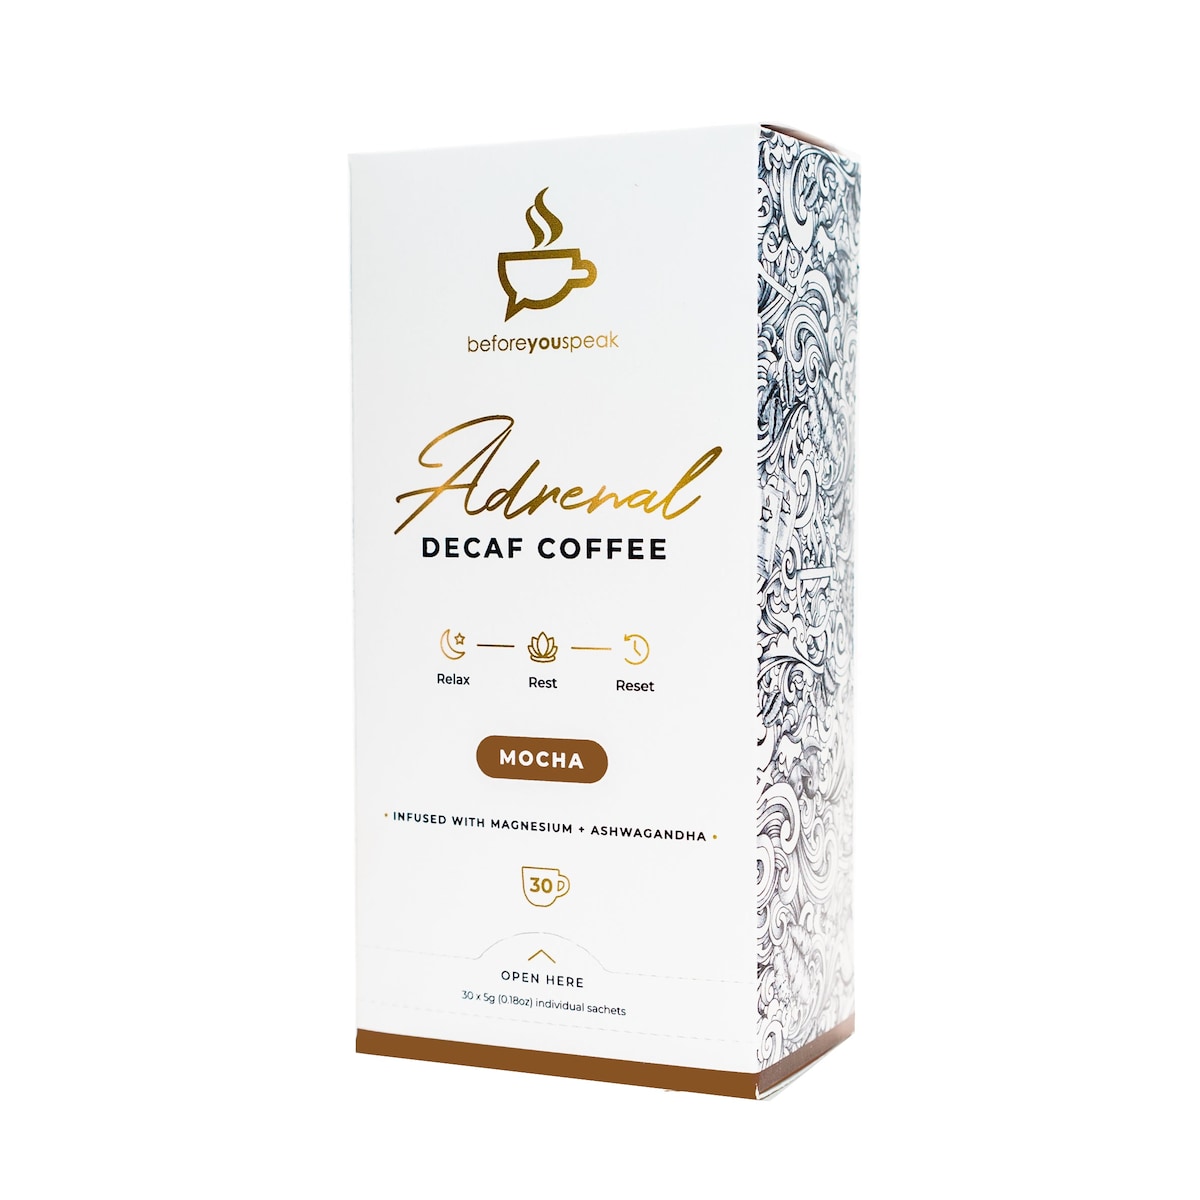 Beforeyouspeak Coffee Adrenal Decaf Coffee Mocha 30 x 5g